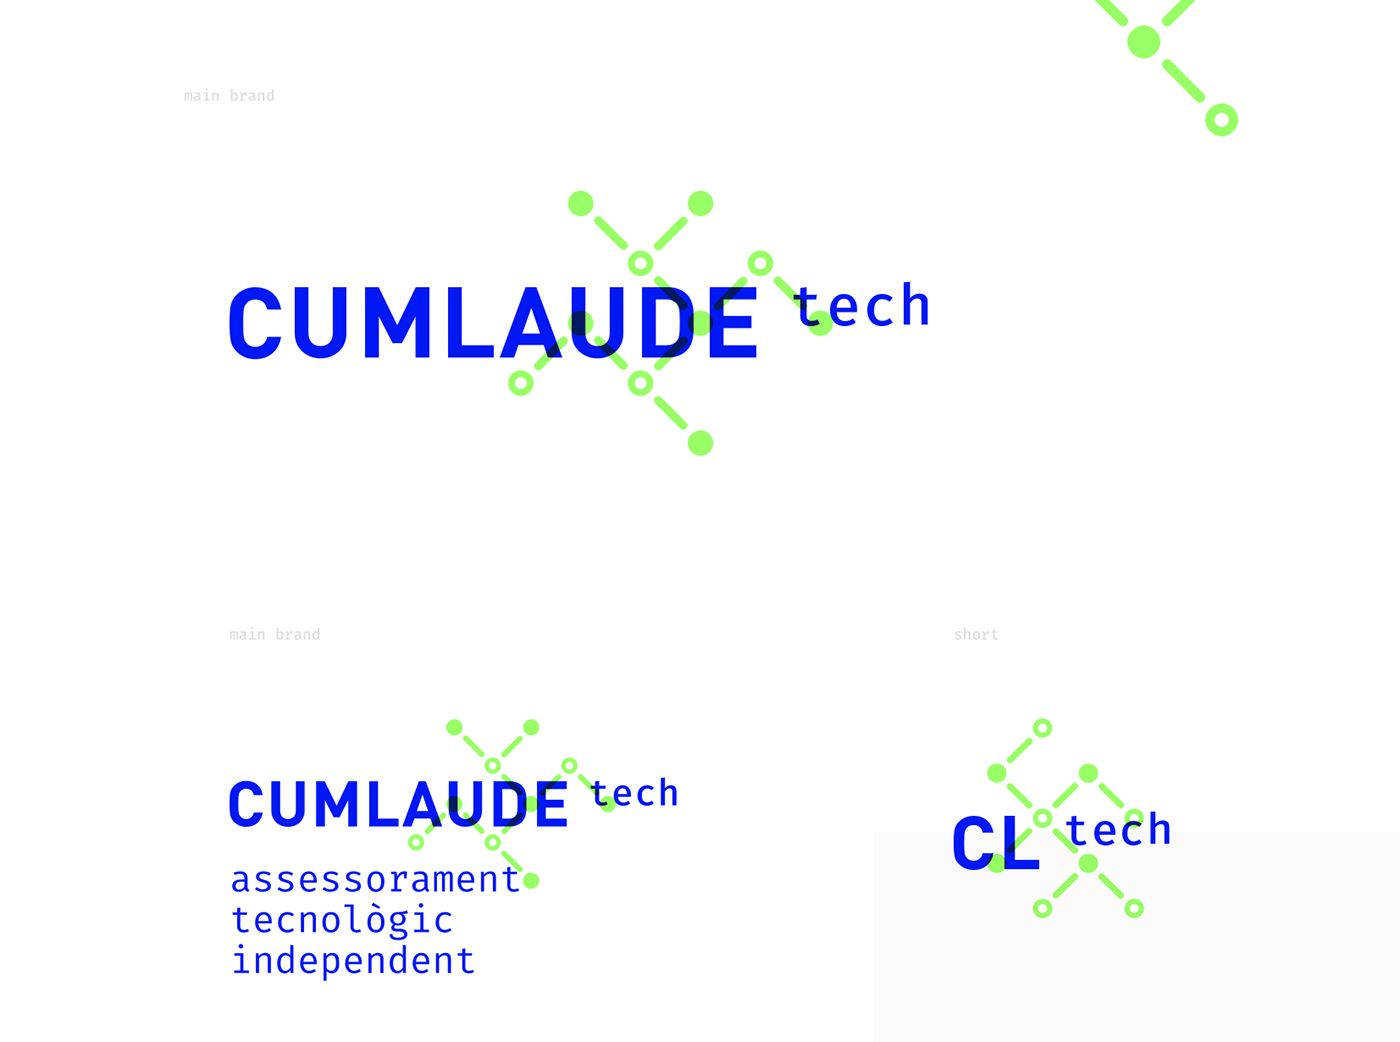 Cumlaude Tech hugo brand logo